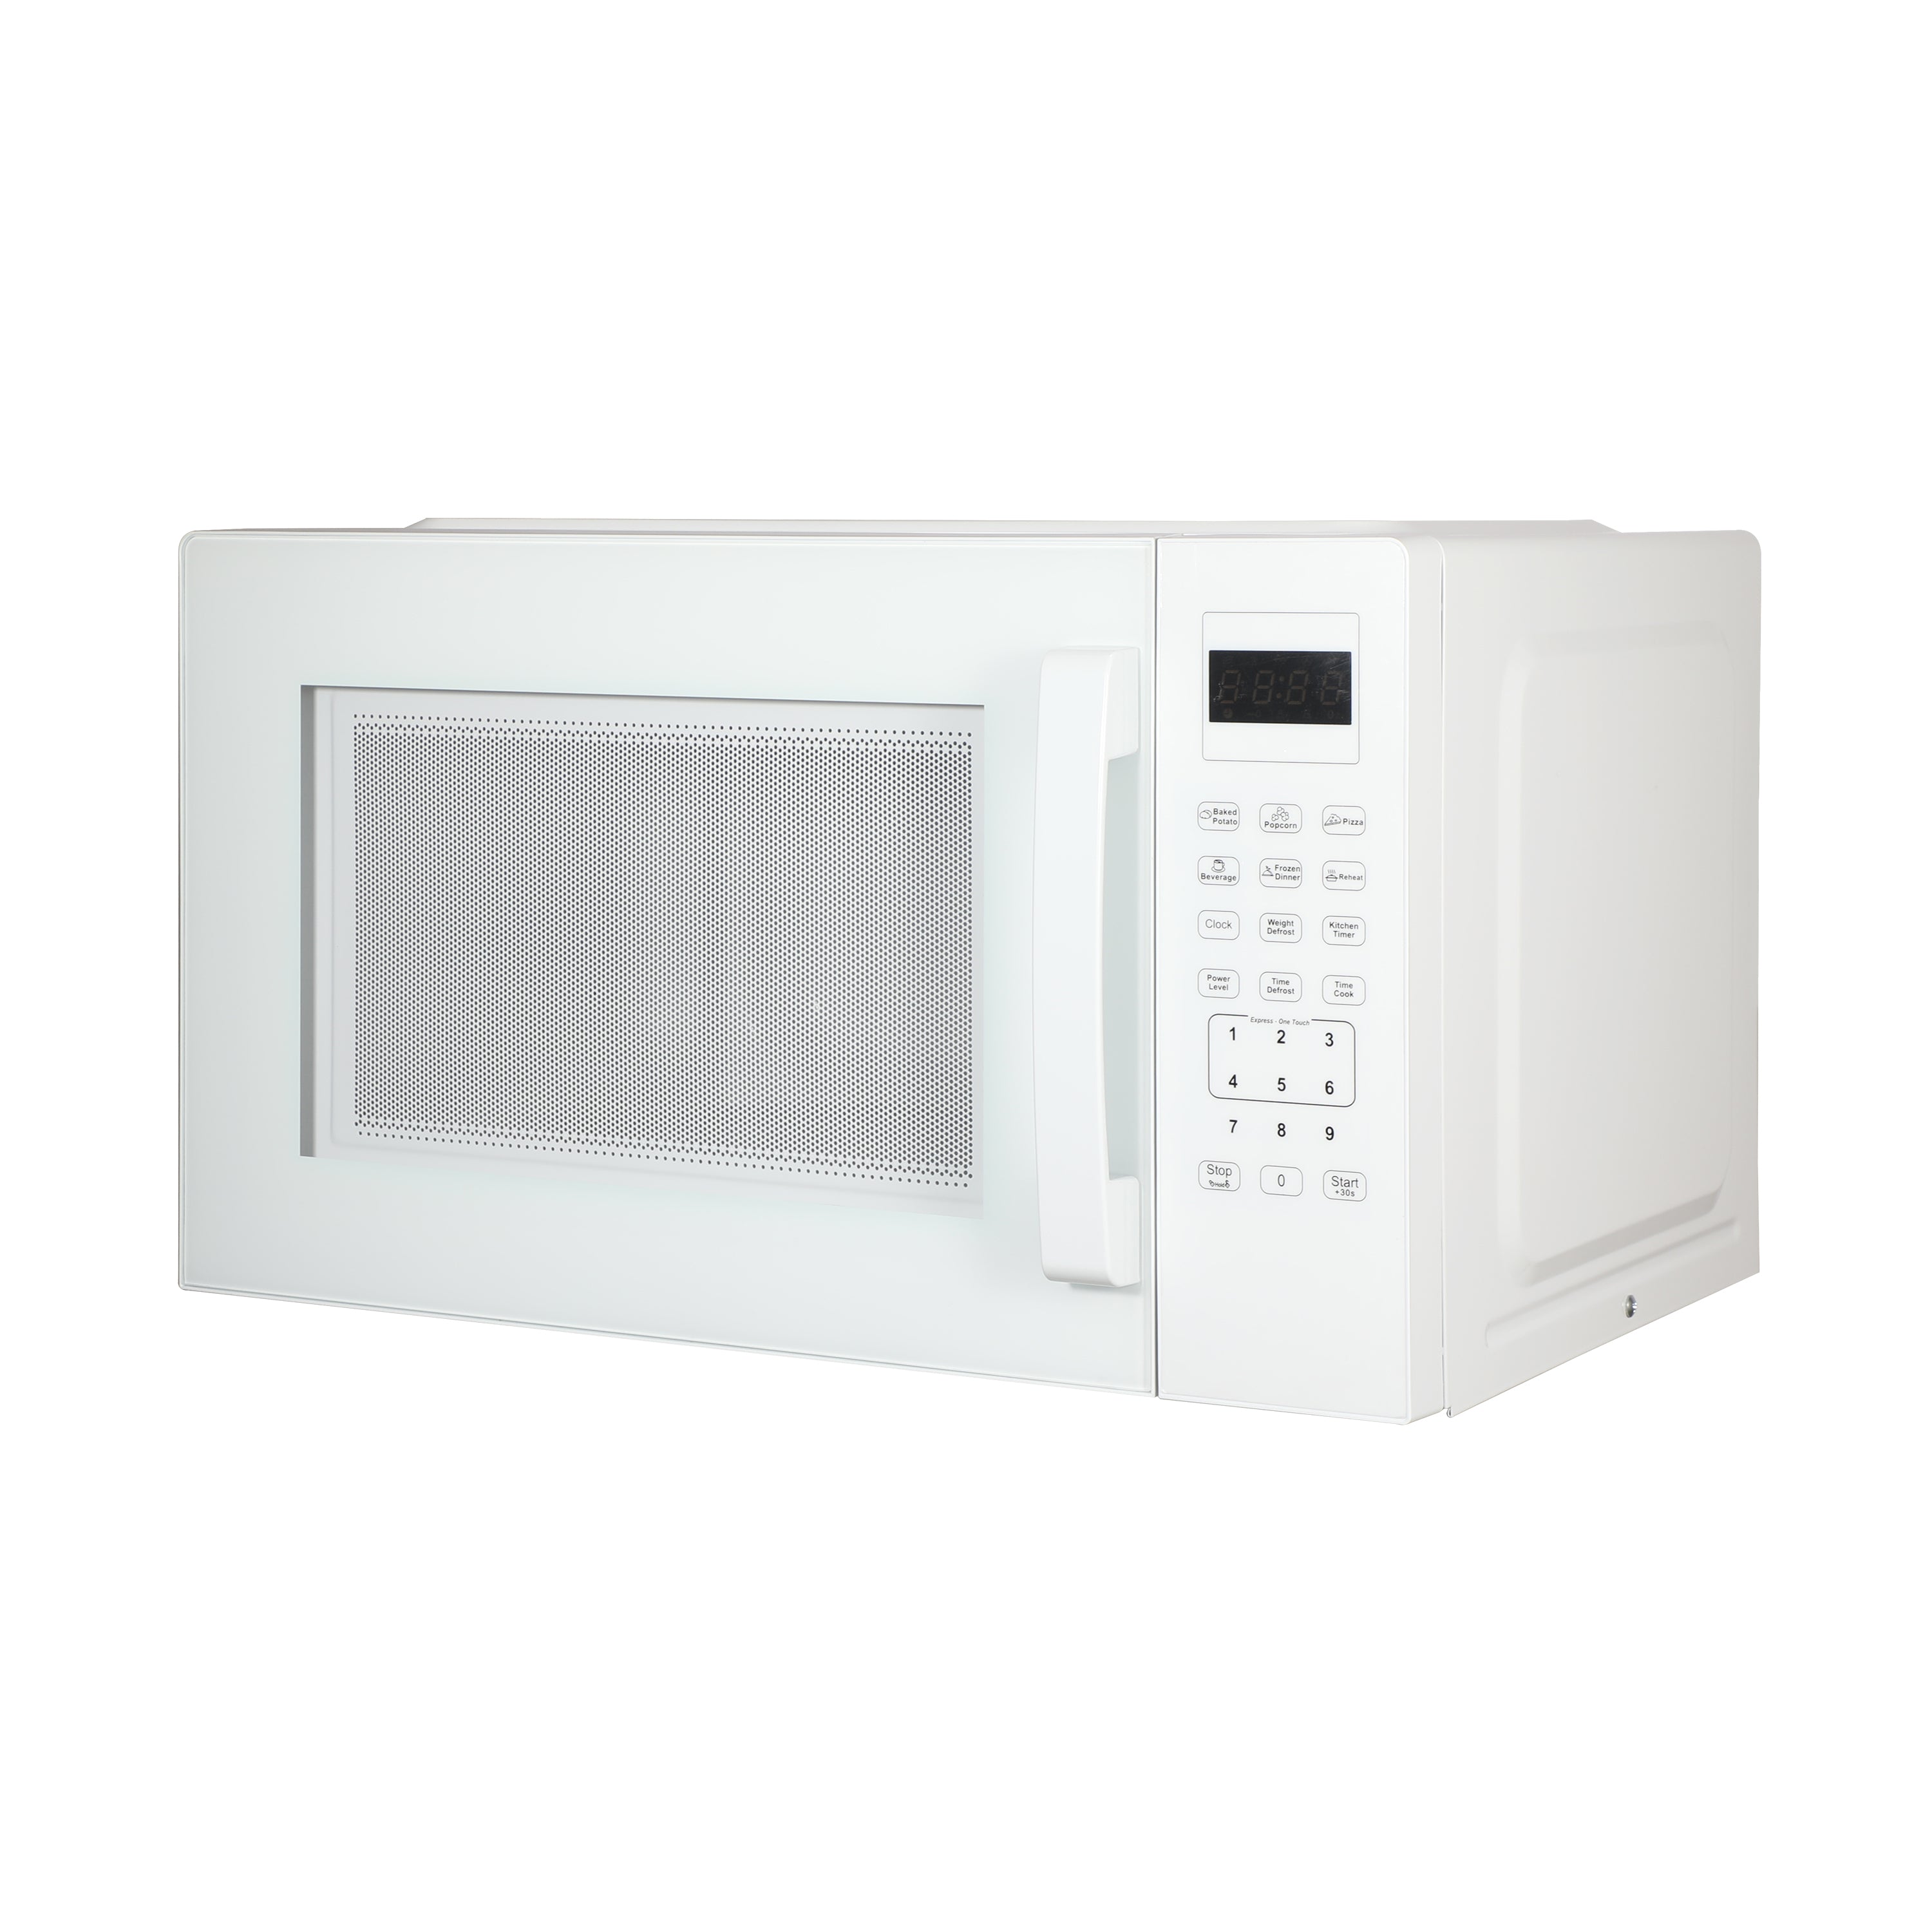 Avanti - MT150V0W, Avanti 1.5 cu. ft. Microwave Oven, in White